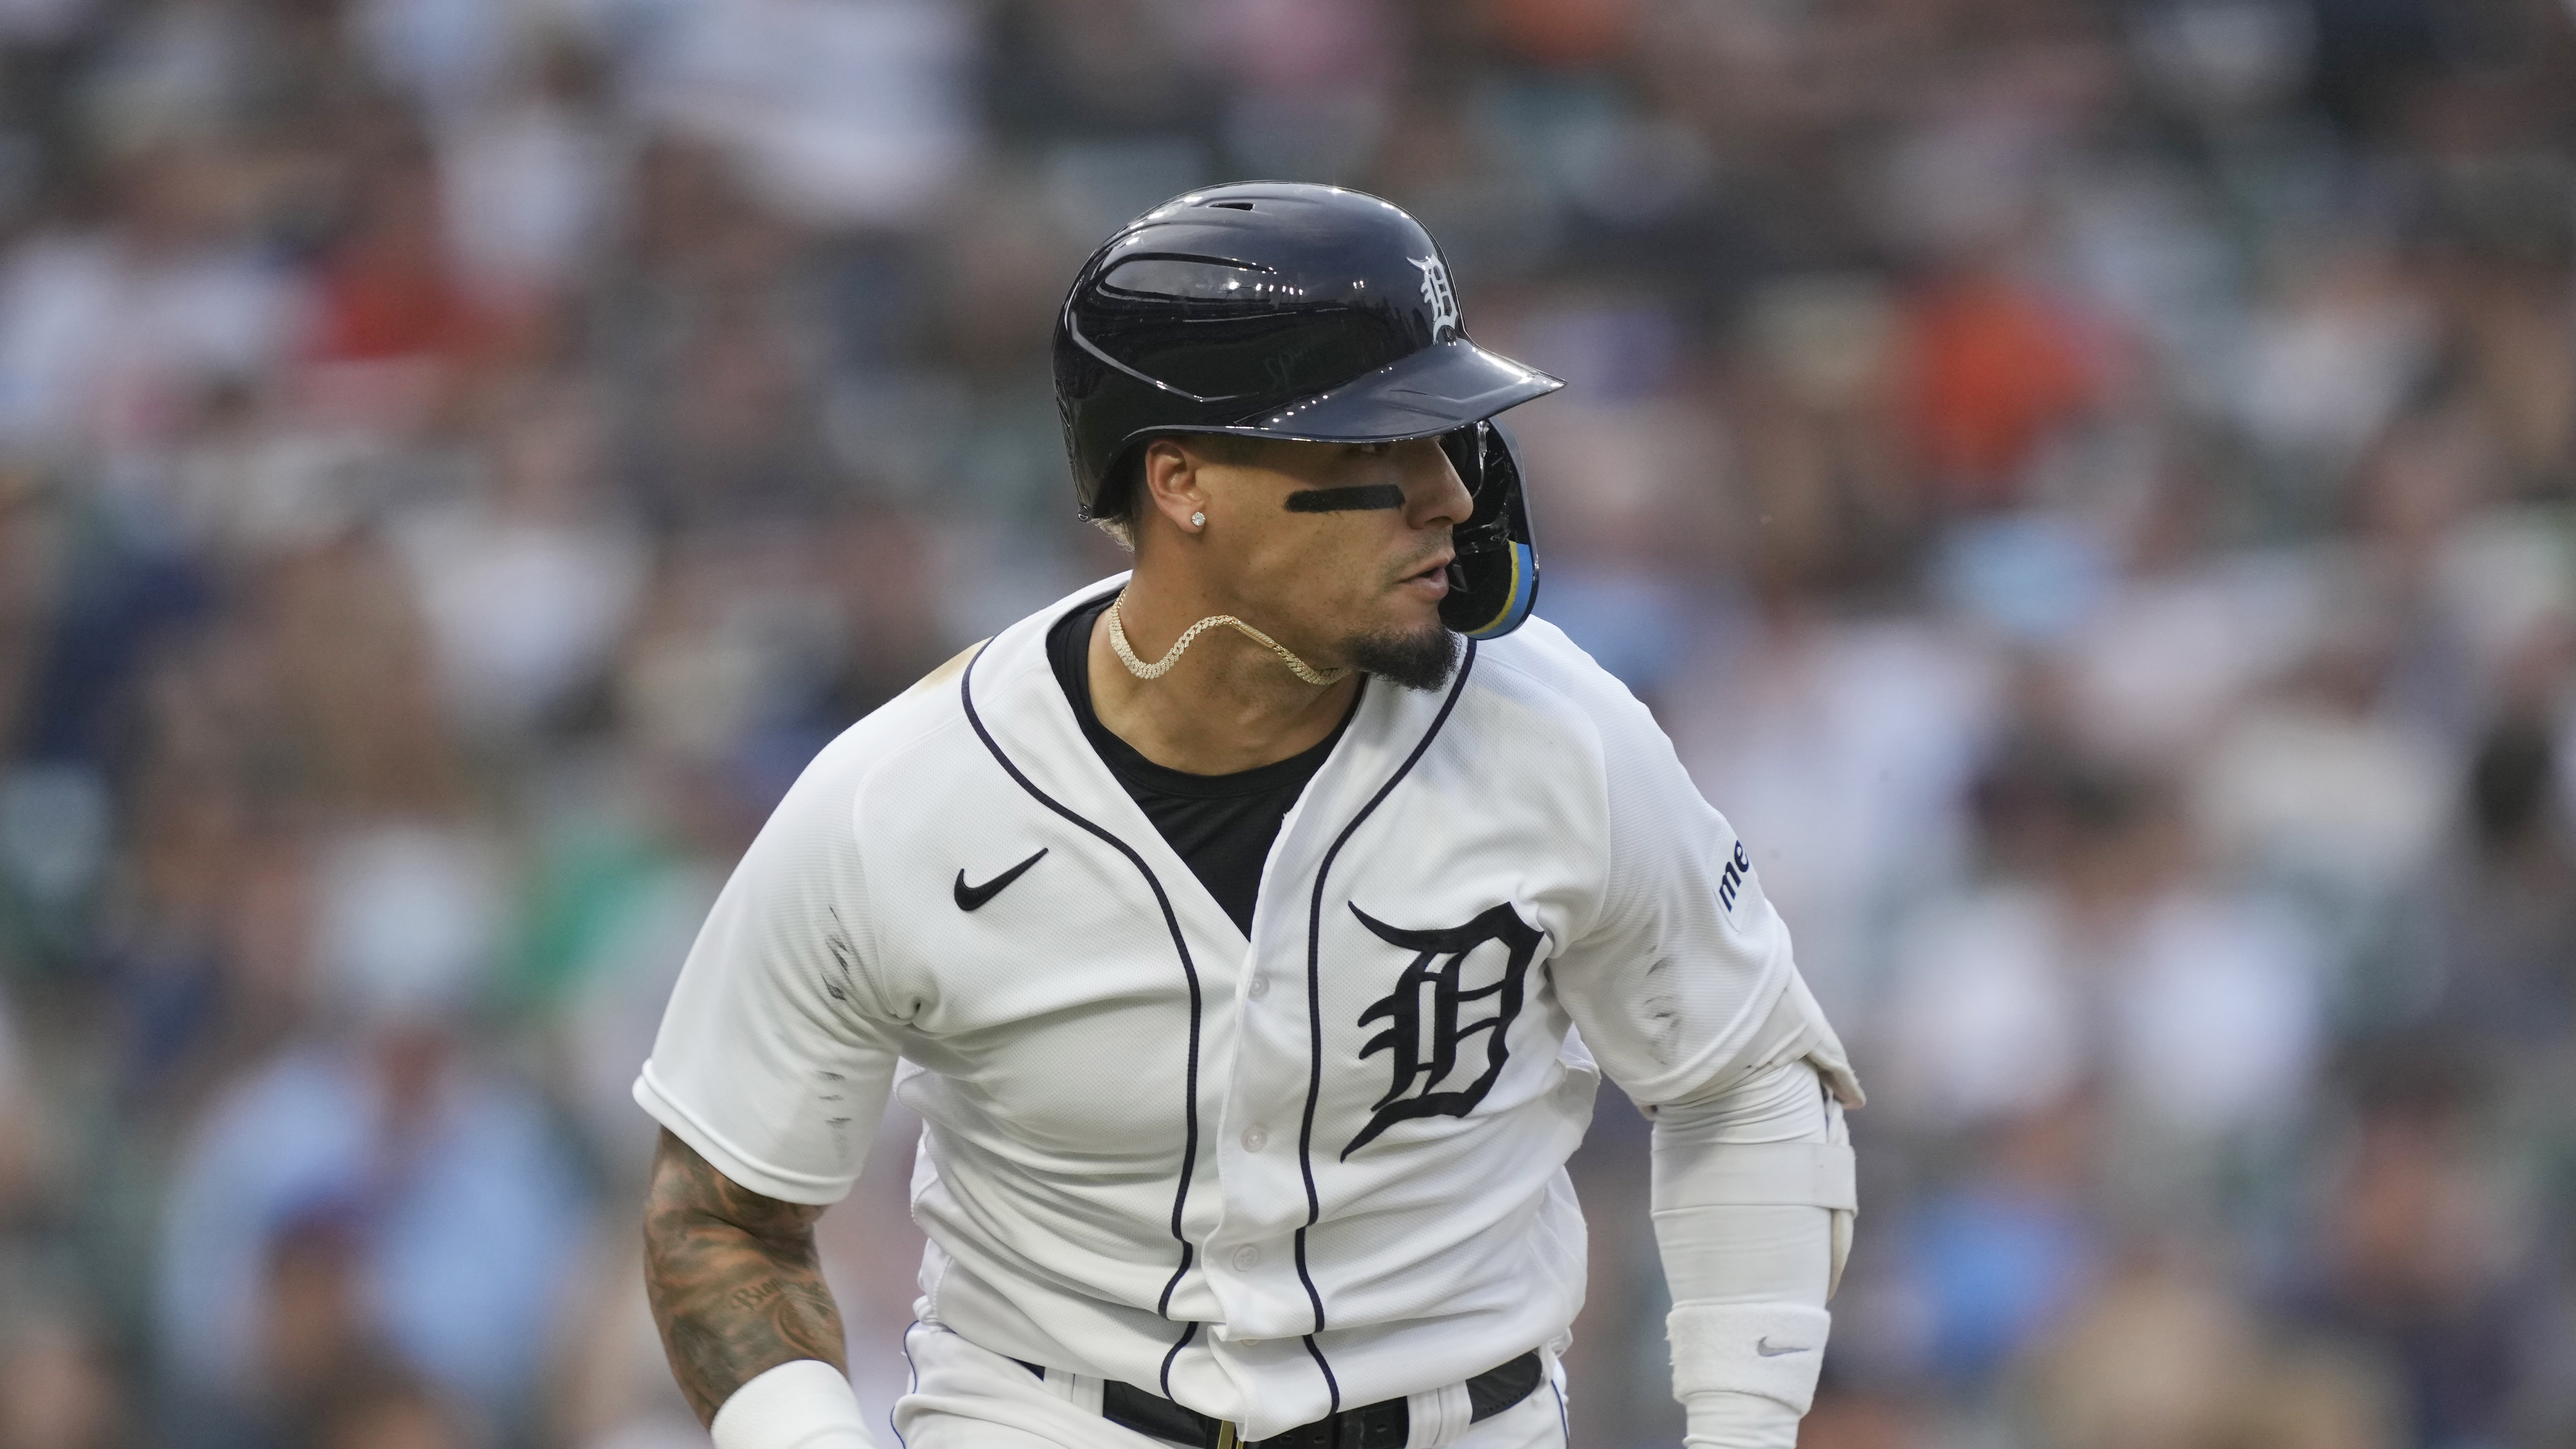 A look at the career of Javier Baez, new Detroit Tigers shortstop